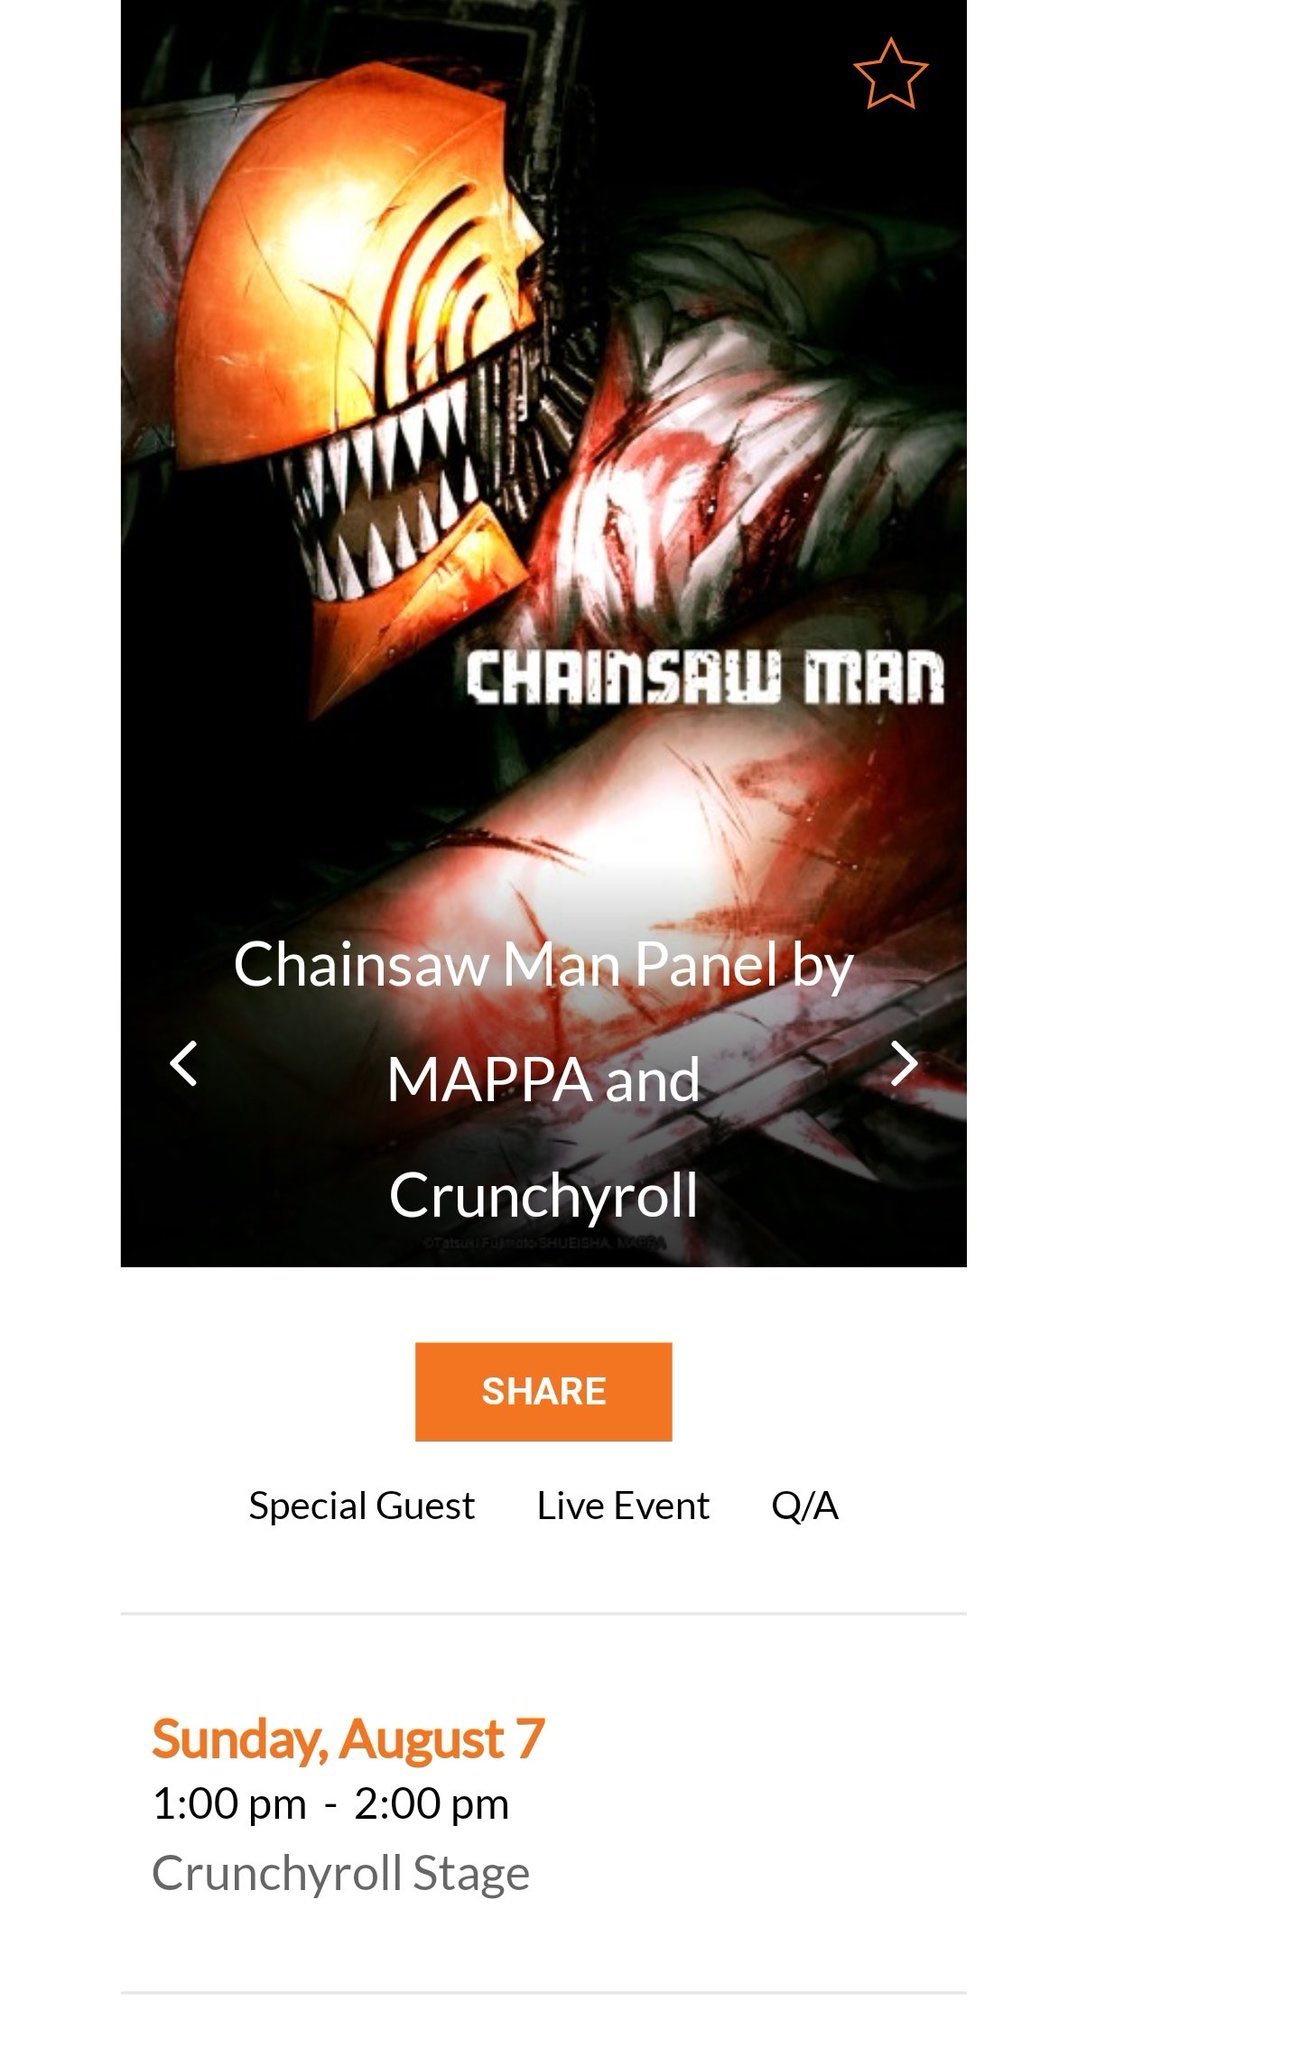 Chainsaw Man Anime: Release Date on Crunchyroll - Crunchyroll News